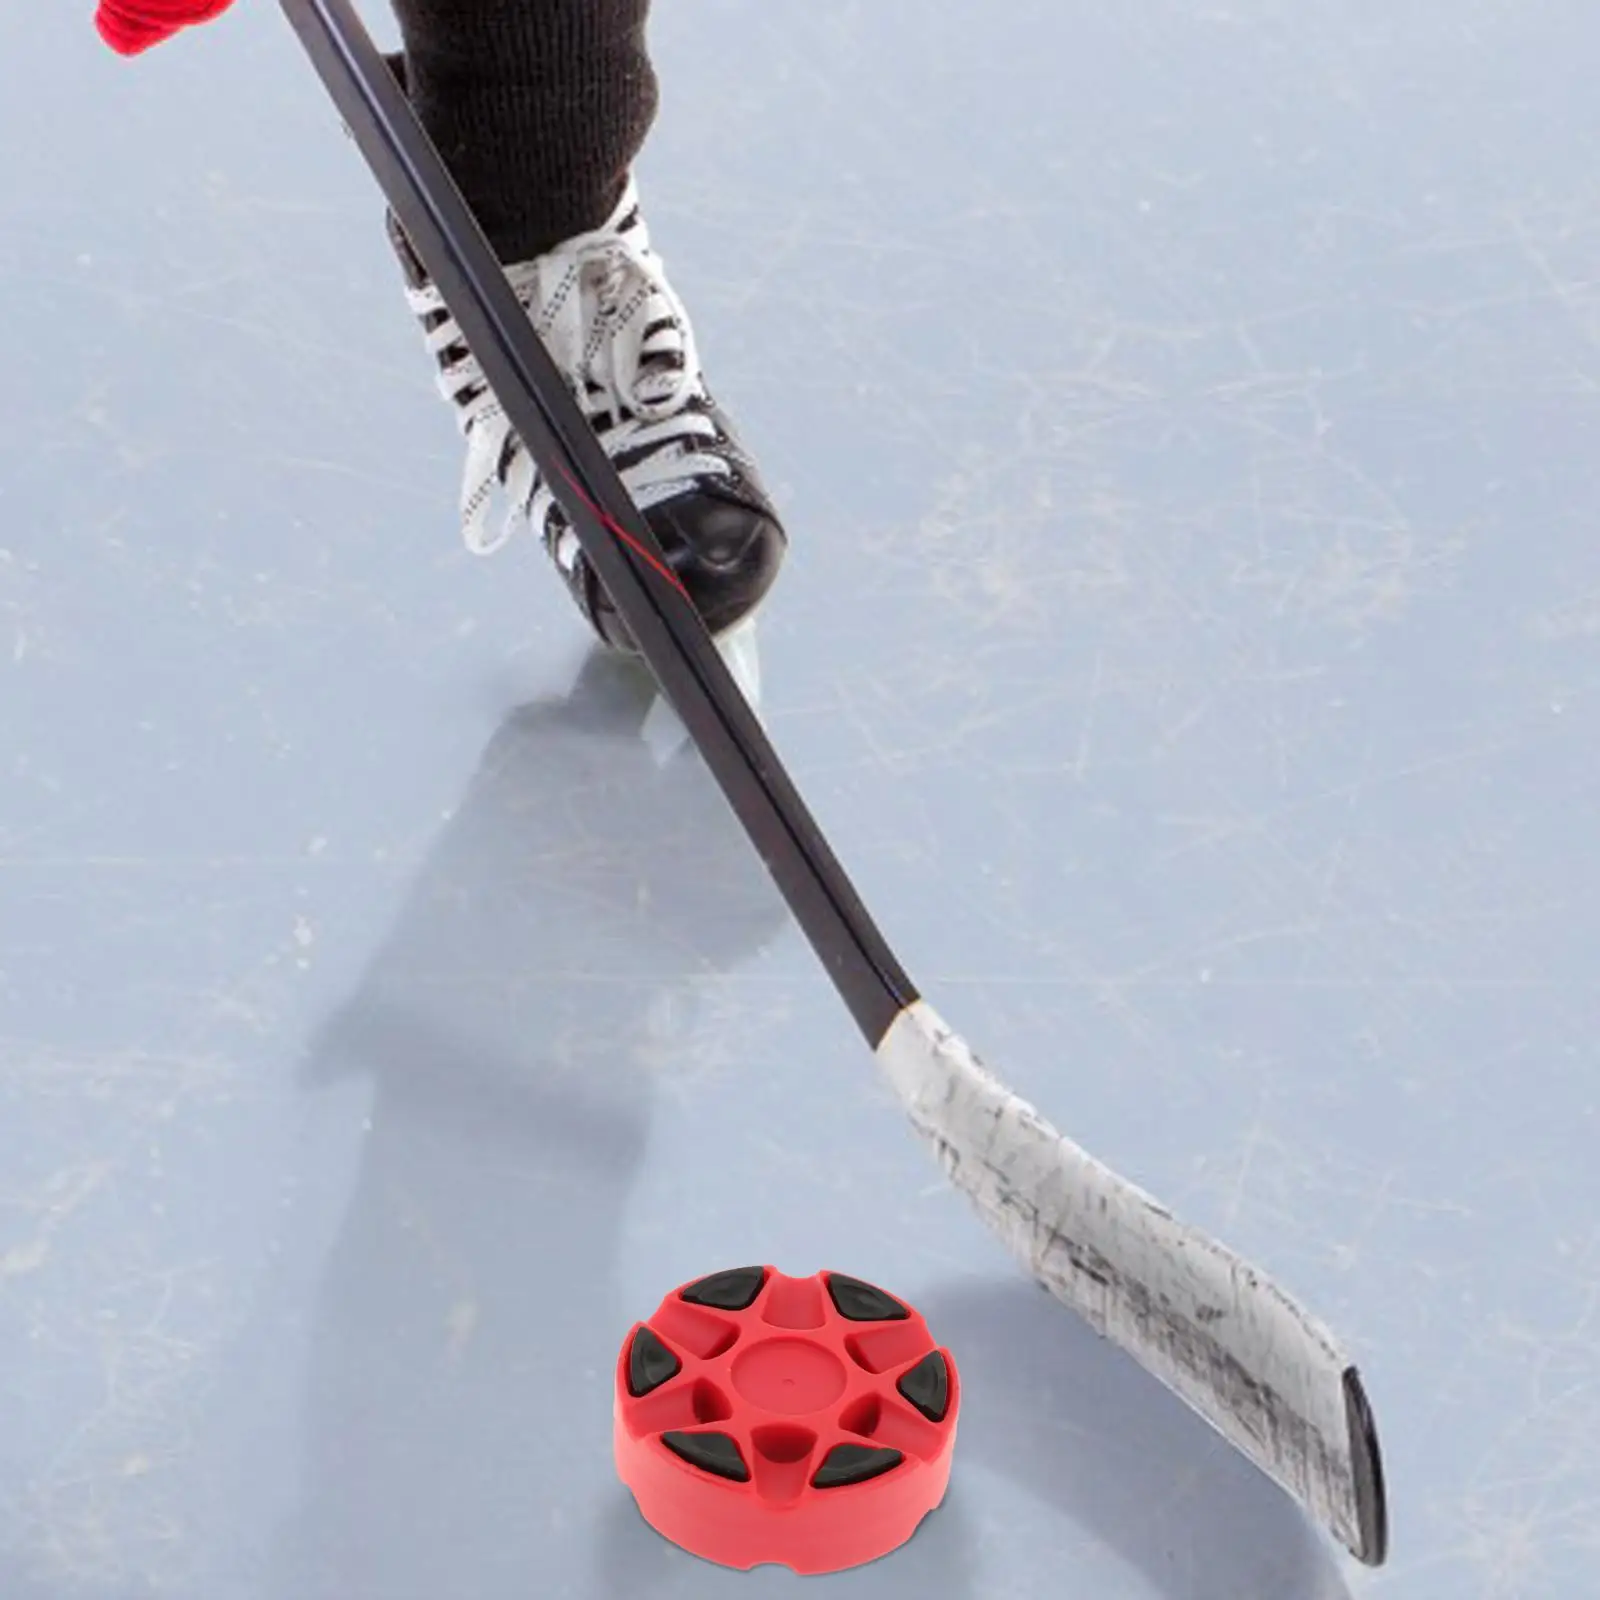 Inline Roller Hockey Puck Equipment Durable Multifunctional Street Hockey Puck for Indoor Outdoor Hockey Practicing 76mmx25mm